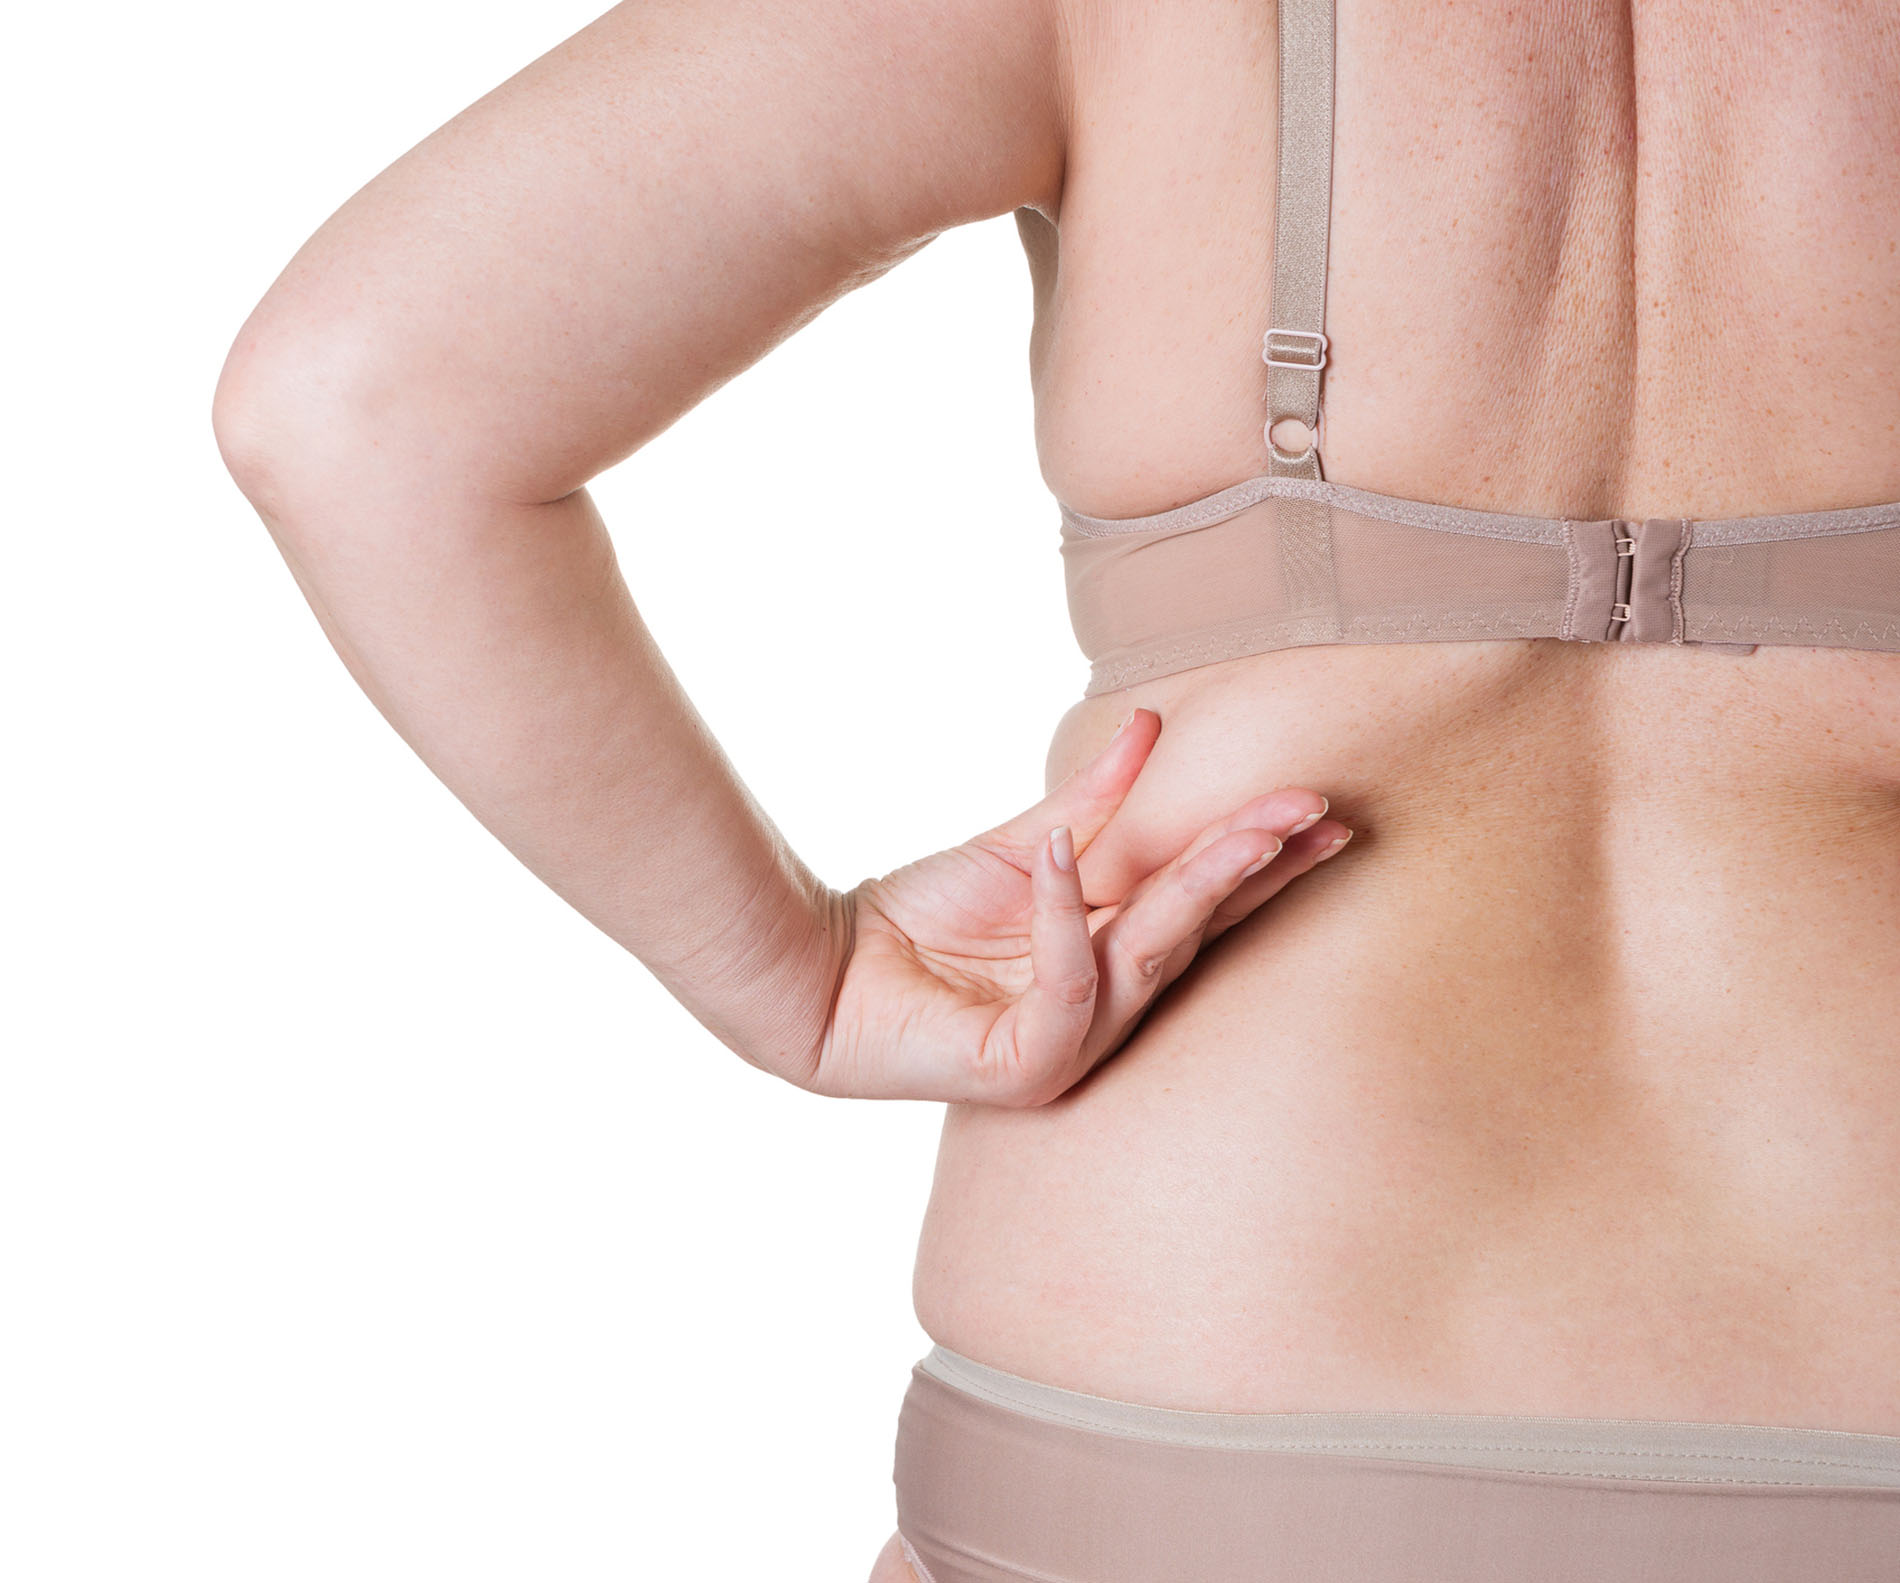 Targeting Bra Bulge with Non-Invasive Procedures